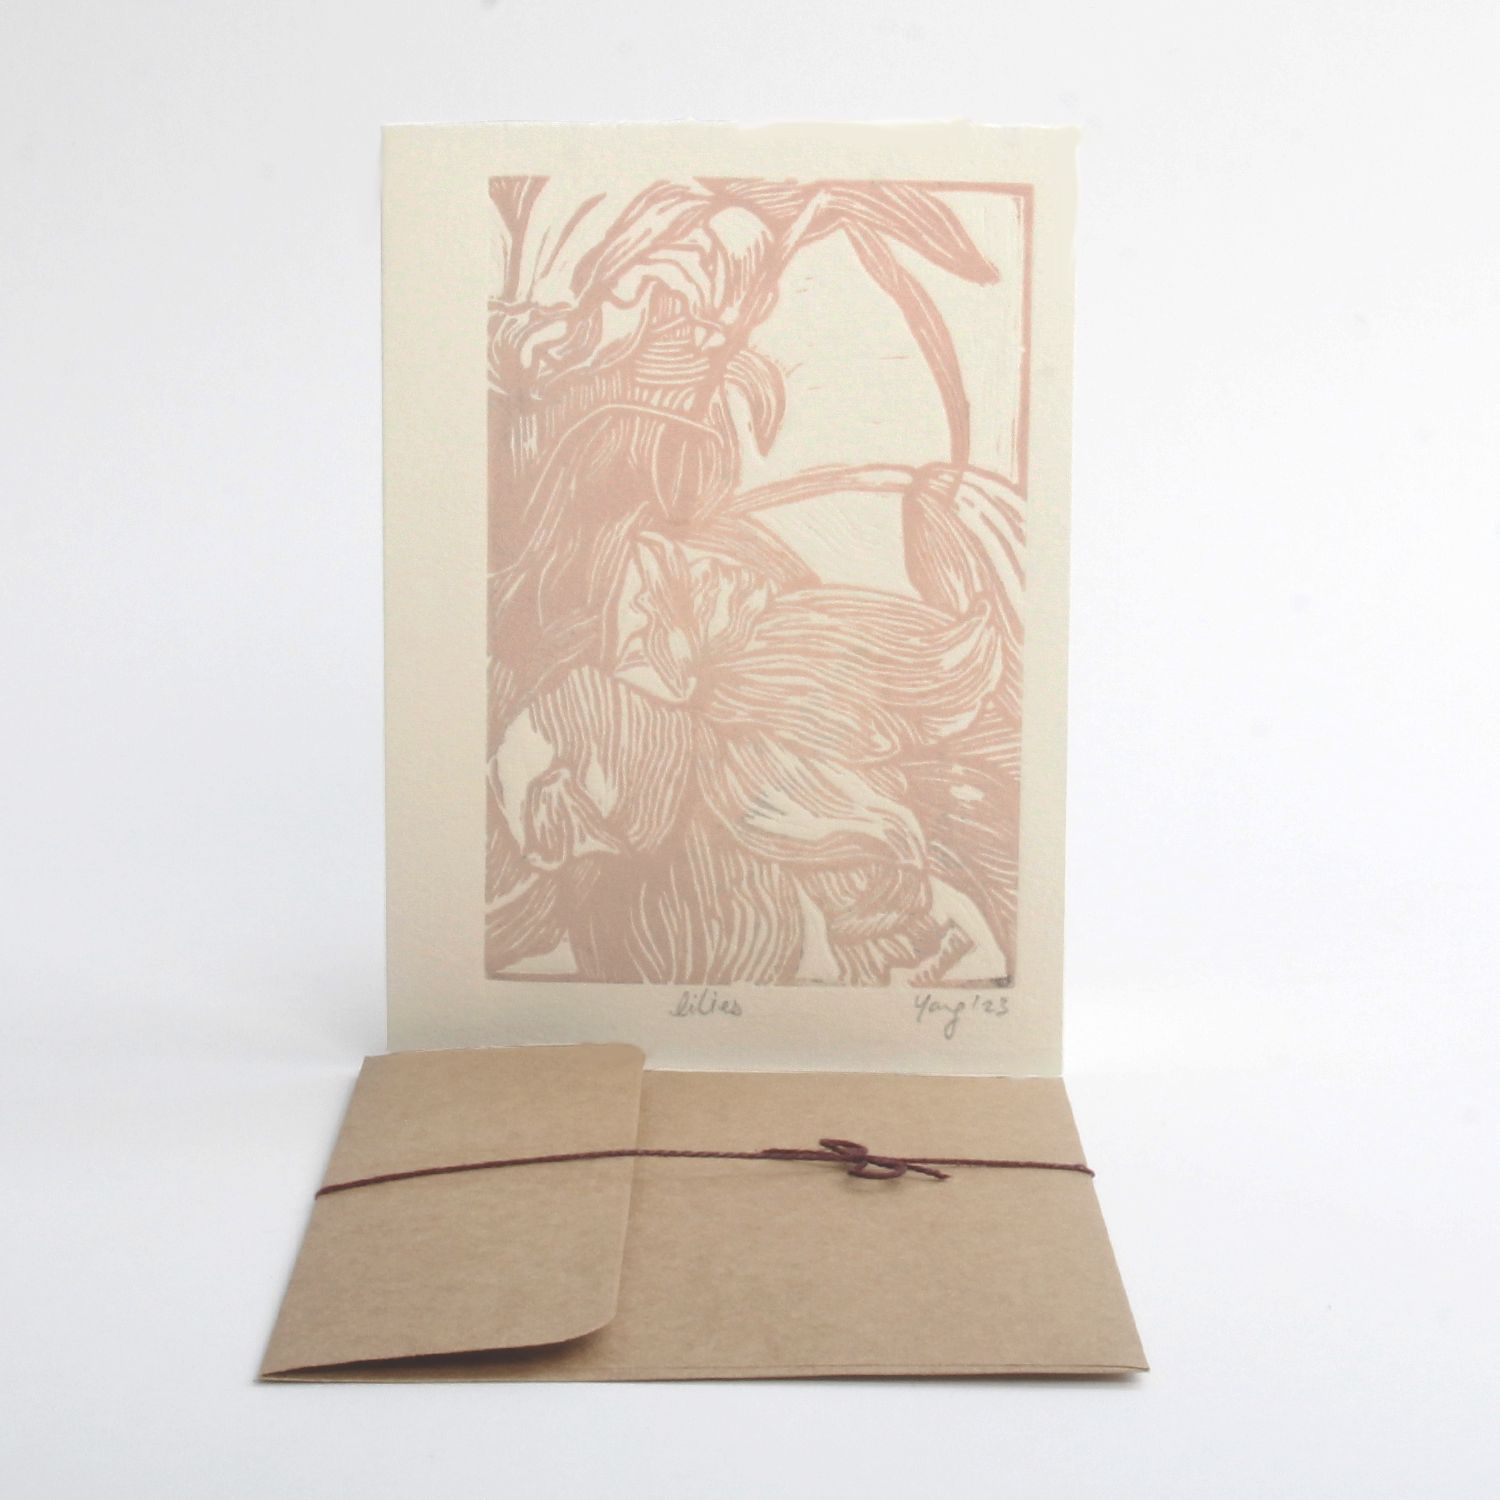 Jing Han Yang: Lilies card Product Image 1 of 1